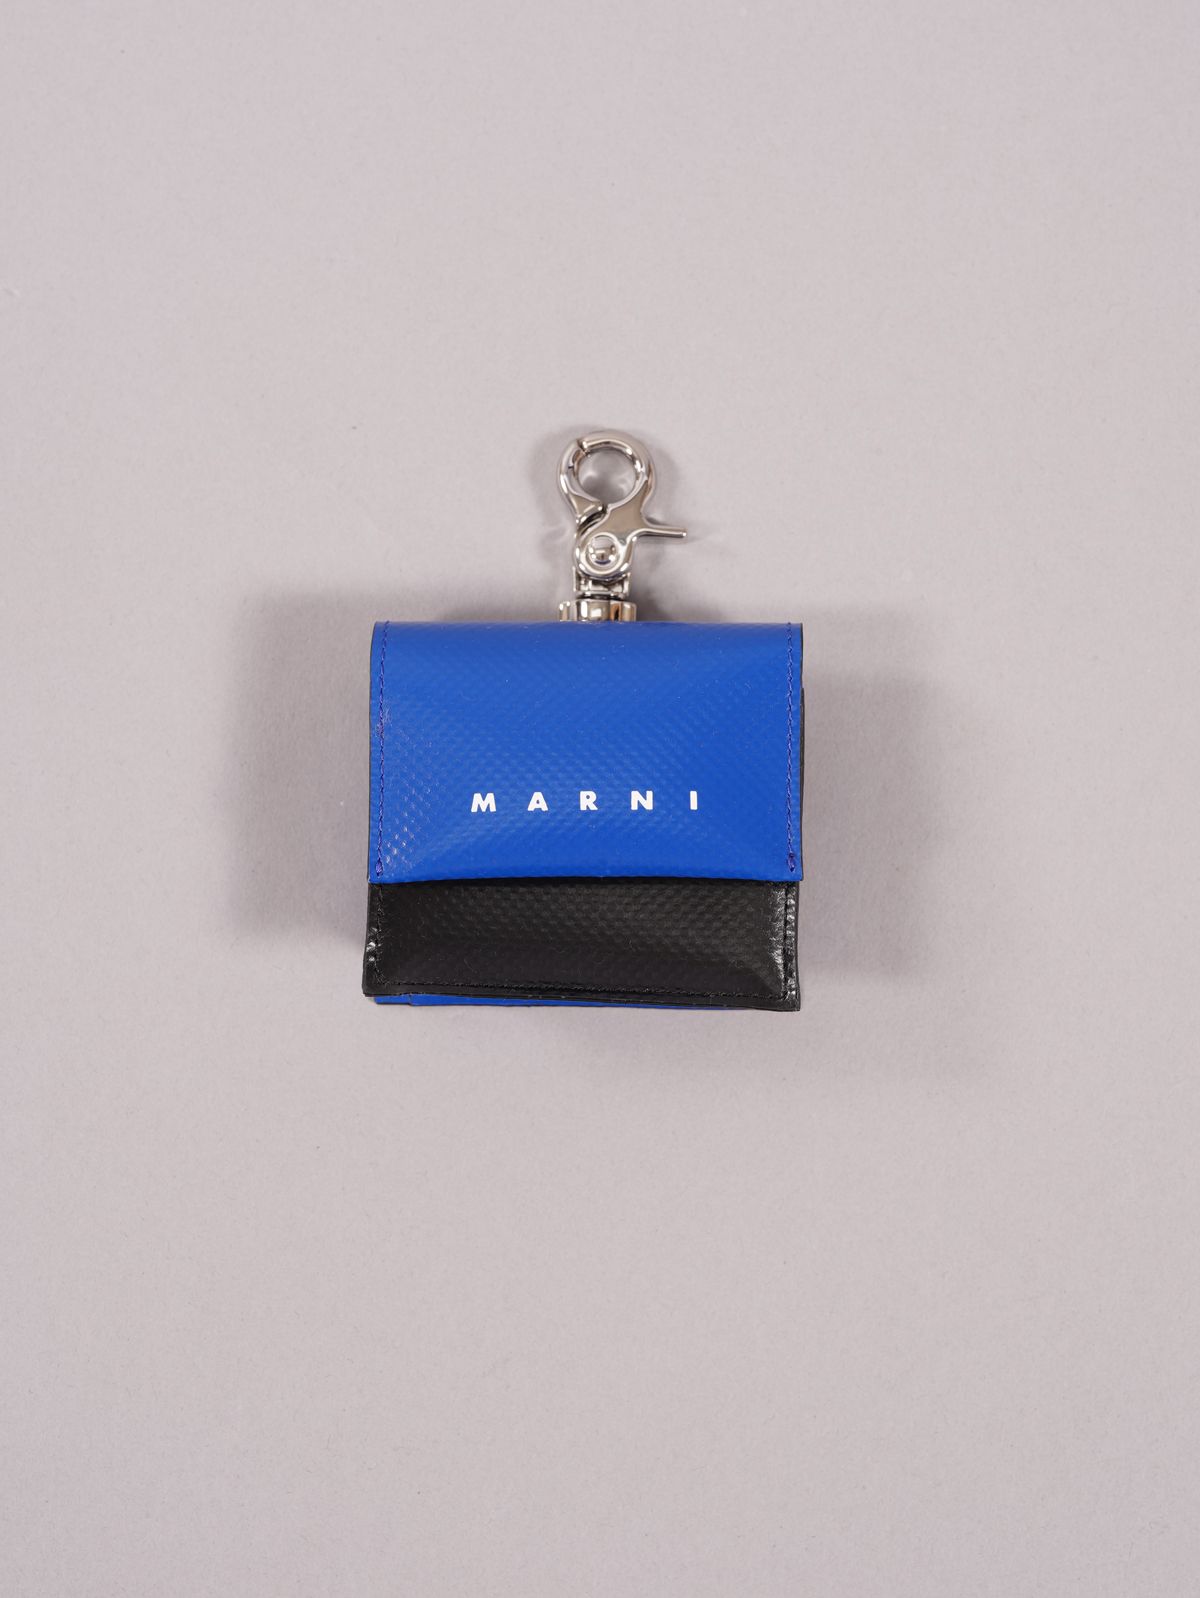 MARNI - 【ラスト1点】エアーポッズ ホルダー / ブルー・ブラック 